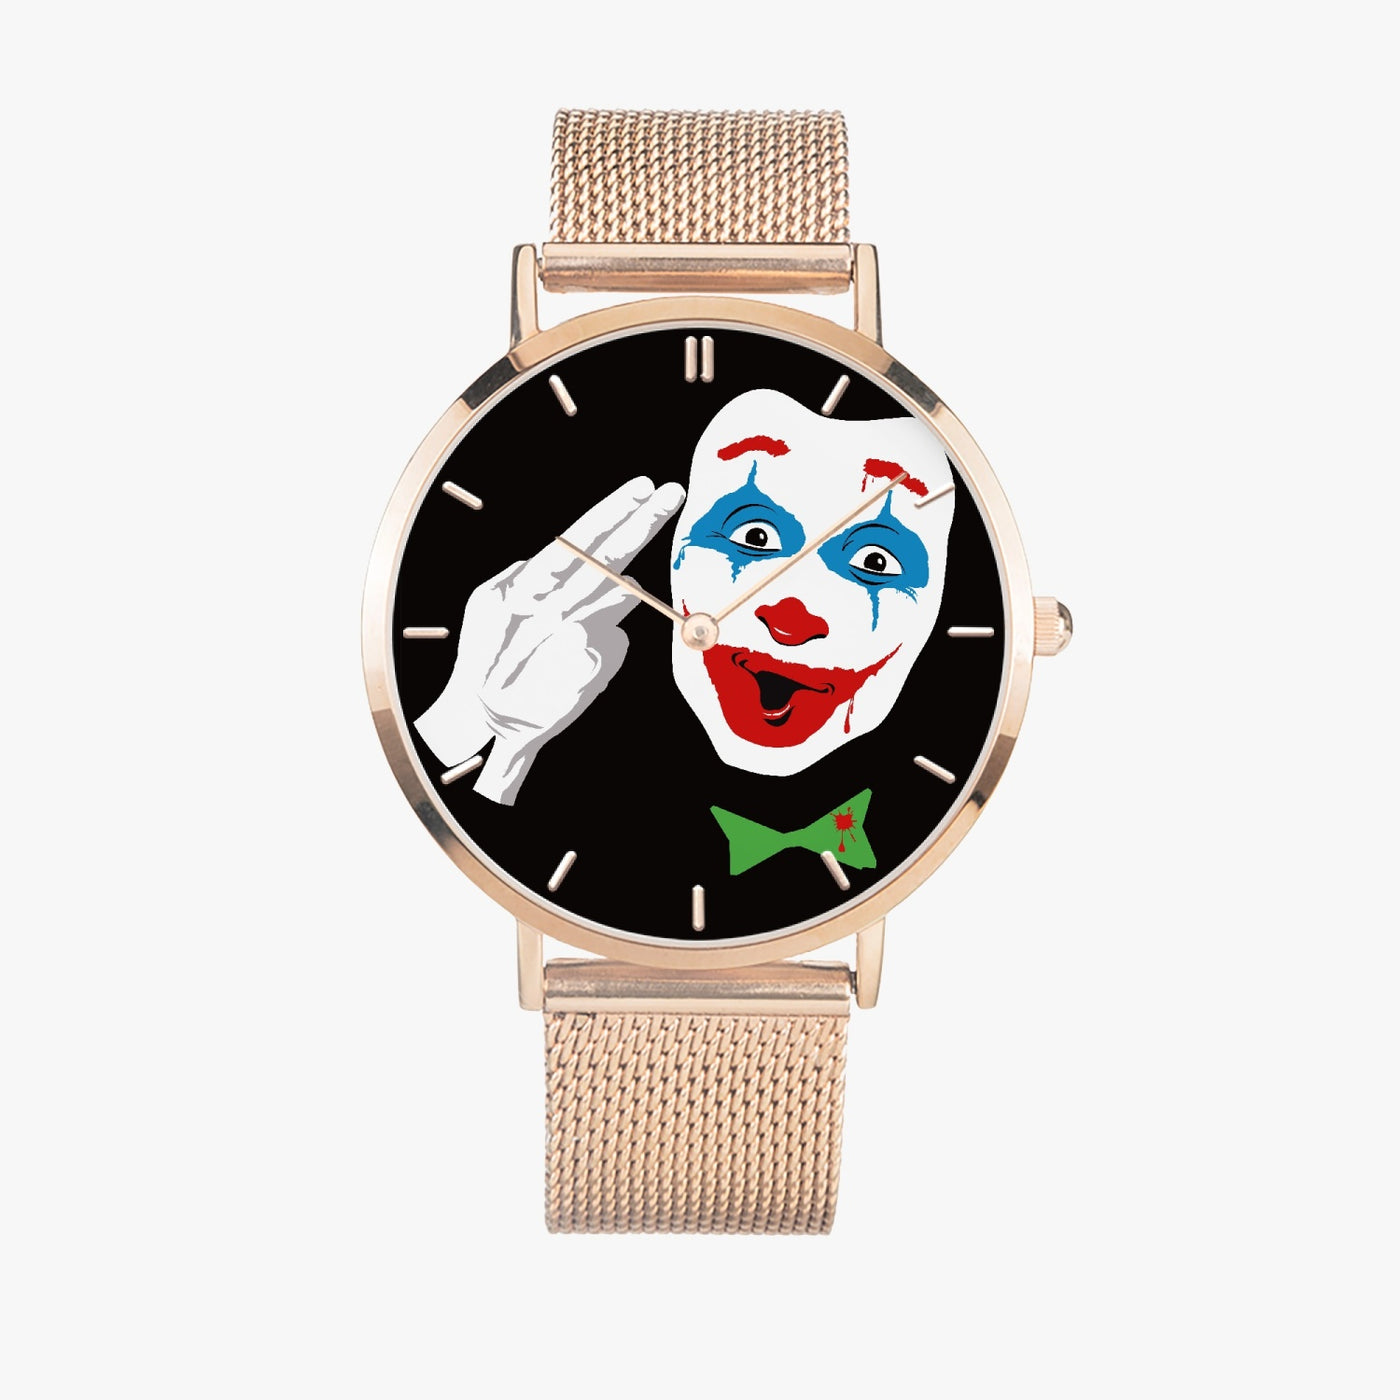 Joker - Fashion Ultra-thin Stainless Steel Quartz Watch (With Indicators)